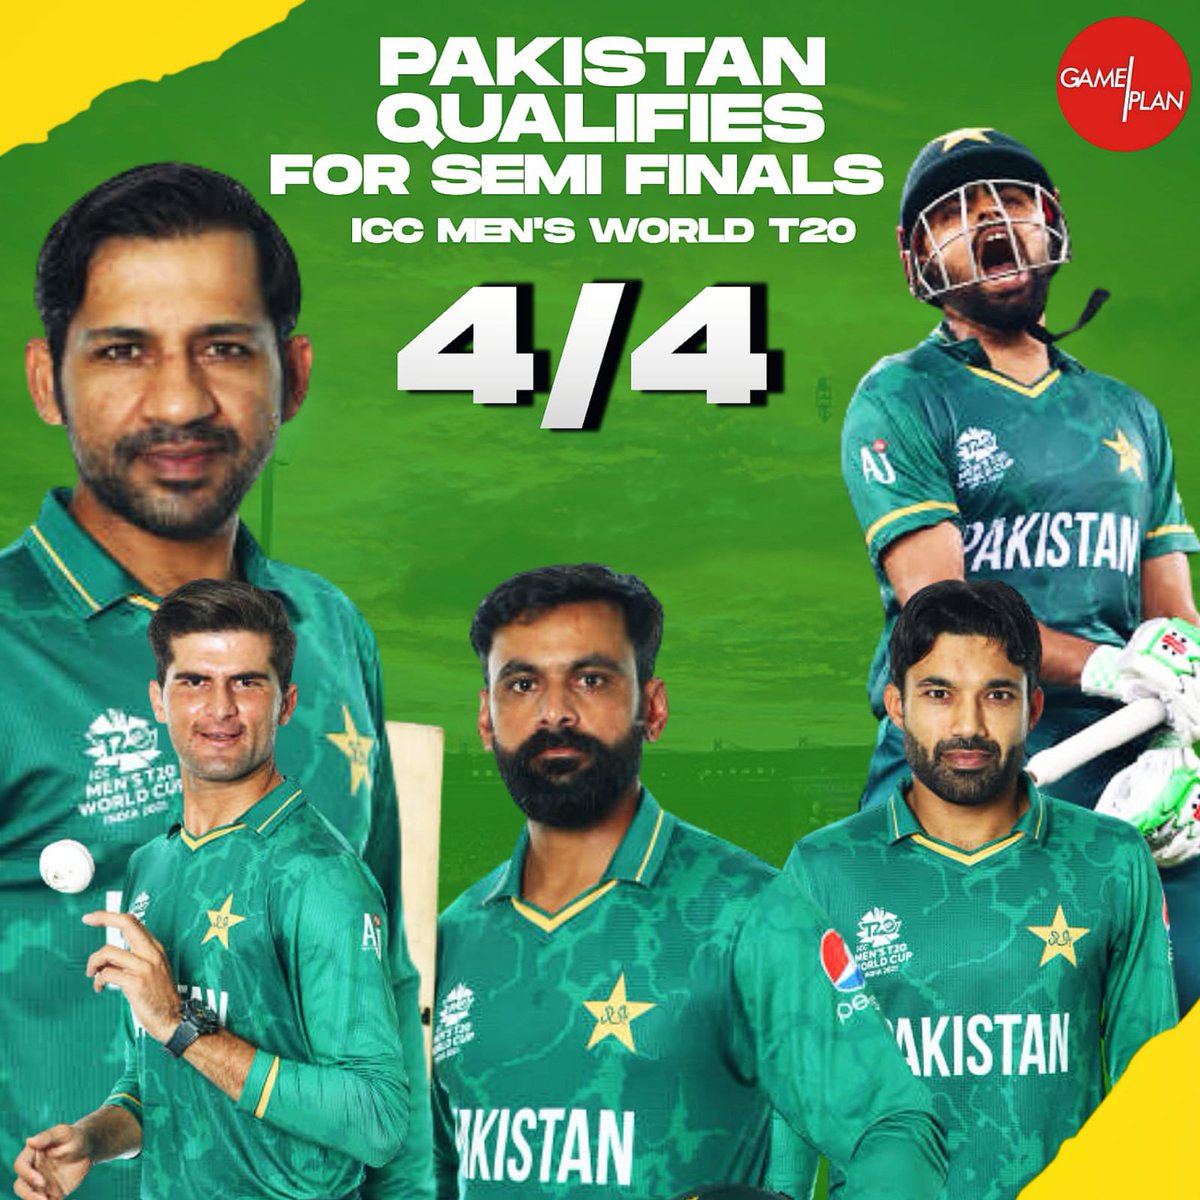 #Pakistan  #IntoTheSemis 🇵🇰🇵🇰🇵🇰🇵🇰z
#4/4 ain’t bad!!! 💚💚💚💚
#Congratulations #TeamPakistan 
#iBleedGreen do you! 💚💚💚
#T20WorldCup 
#ICCT20WorldCup2021 🇵🇰
#PakvsNamibia 🇵🇰
@GamePlanPK